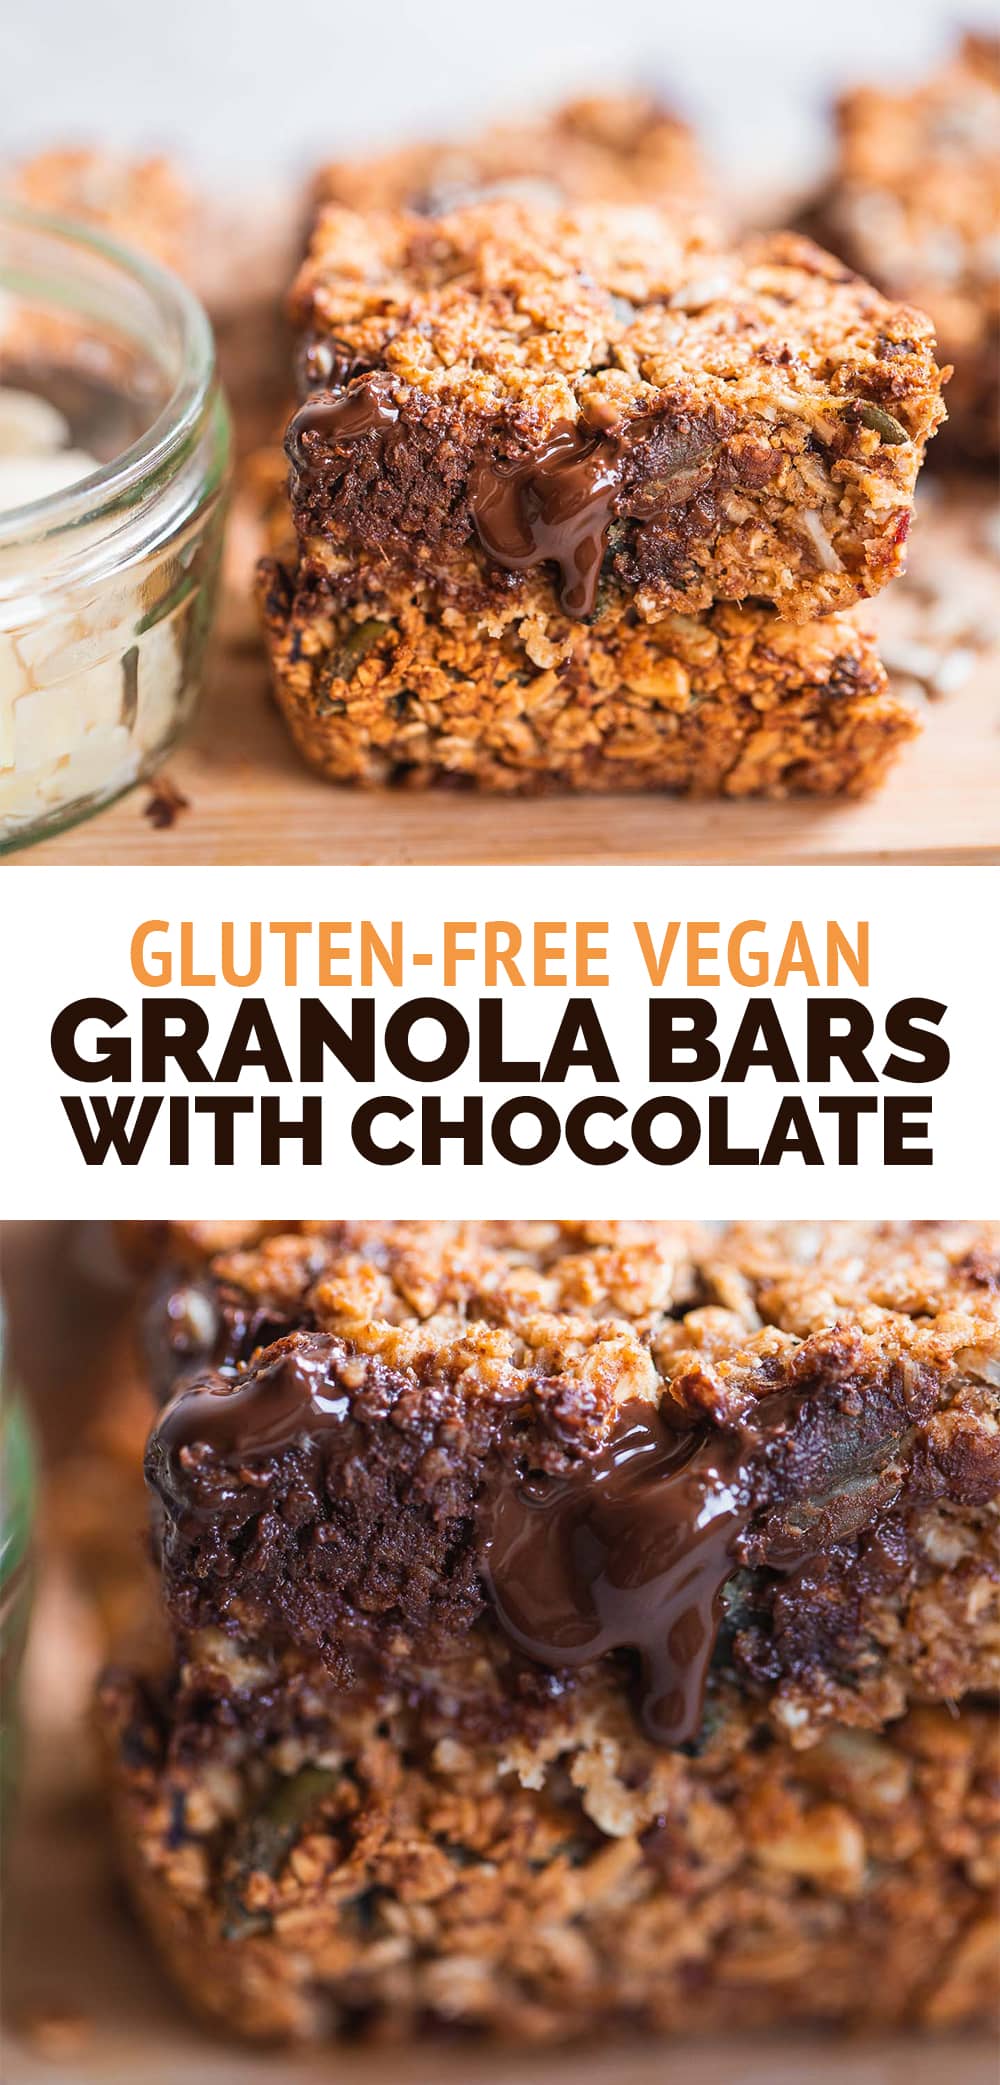 Gluten-free vegan granola bars